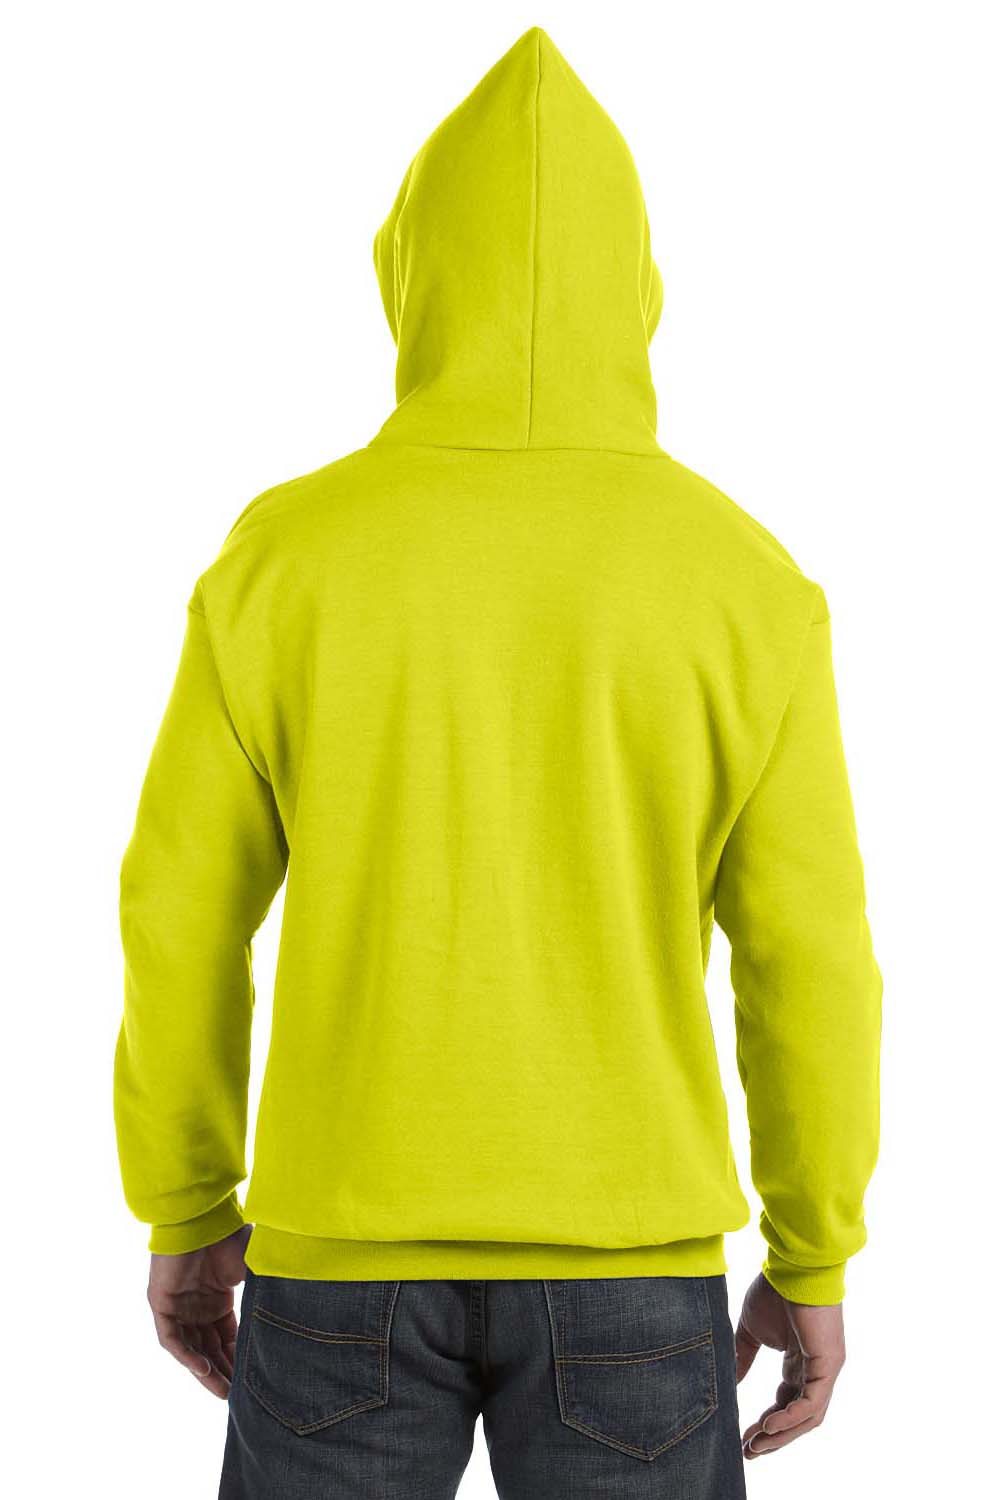 Hanes P170 Mens EcoSmart Print Pro XP Hooded Sweatshirt Hoodie Safety Green Back